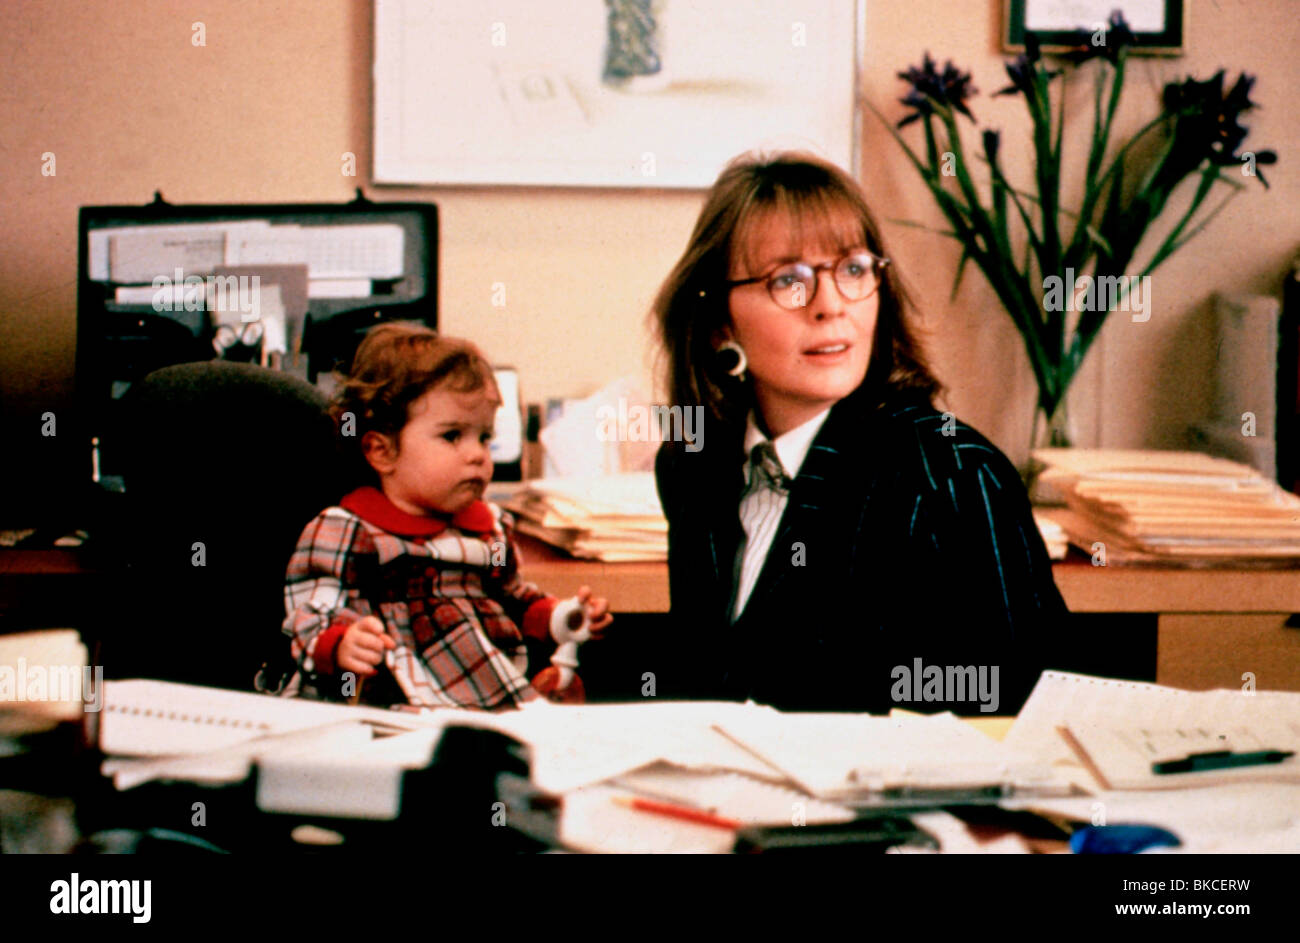 BABY BOOM (1987) KRISTINA KENNEDY, MICHELLE KENNEDY, DIANE KEATON BYB 028 Stock Photo